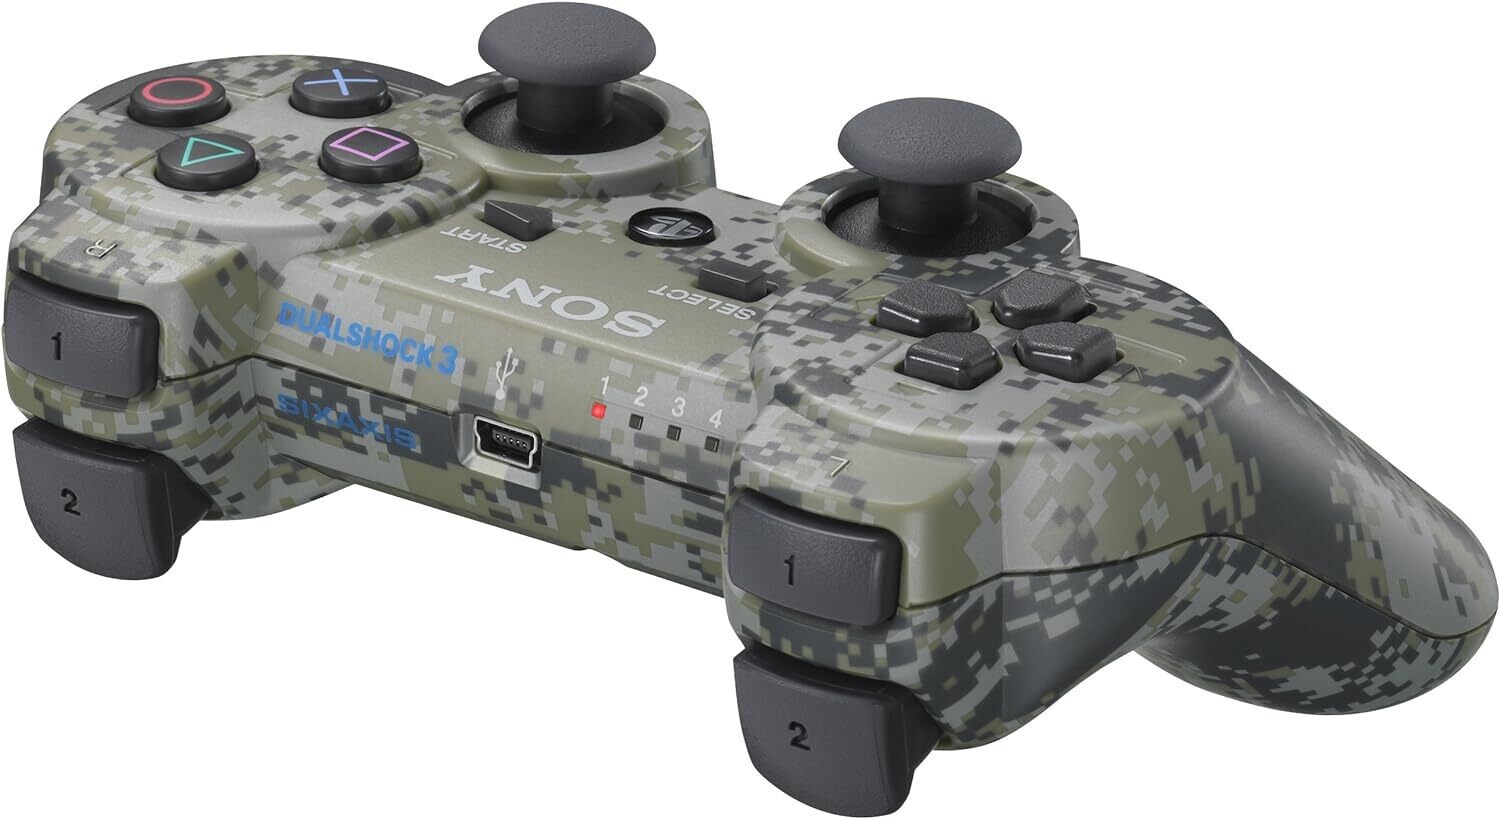 Originalus Sony PS3 bevielis pultelis Urban Camouflage DualShock 3